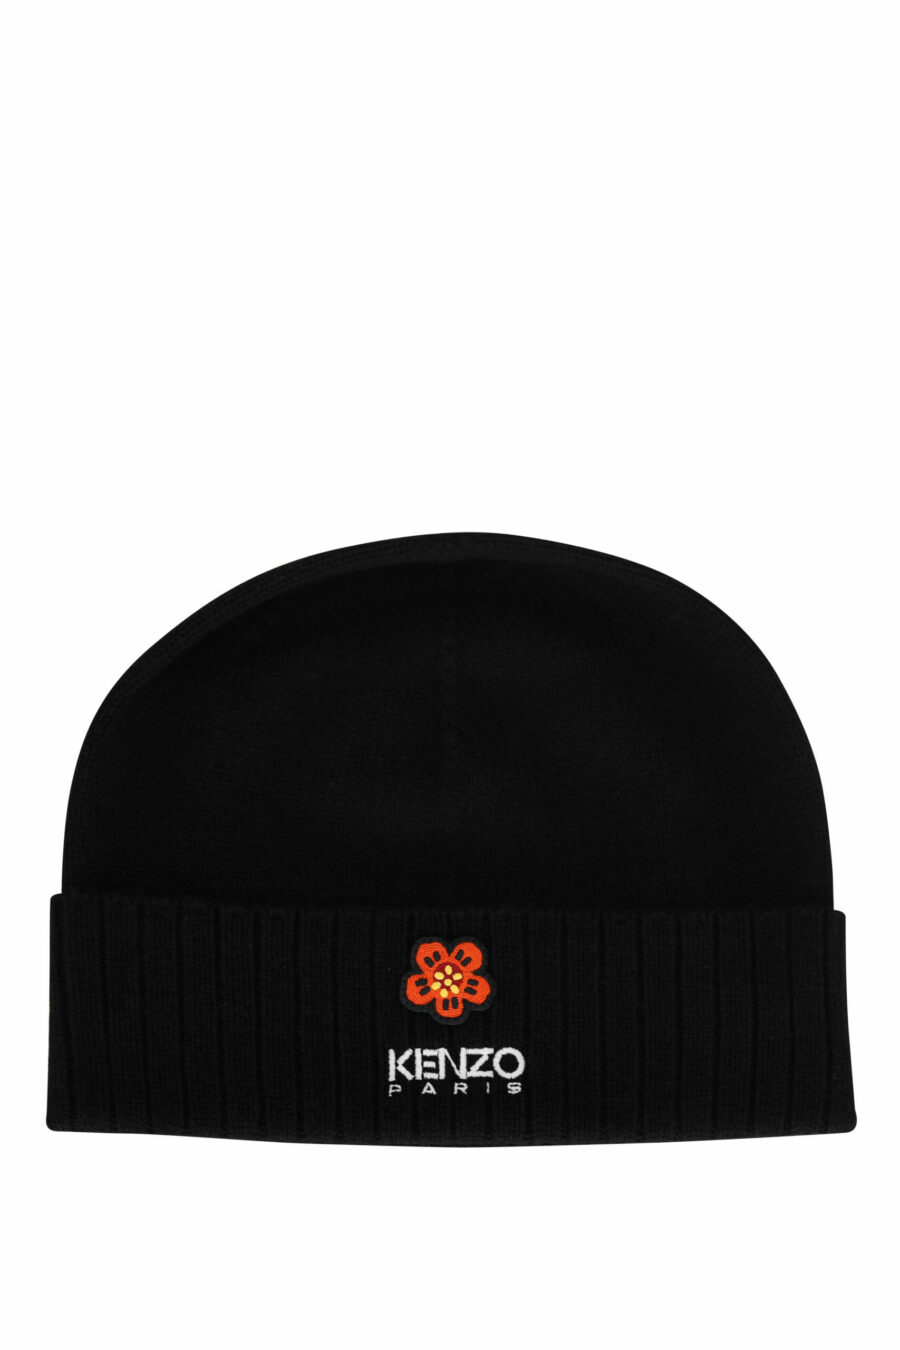 Black cap with "kenzo paris" logo - 3612230524866 scaled